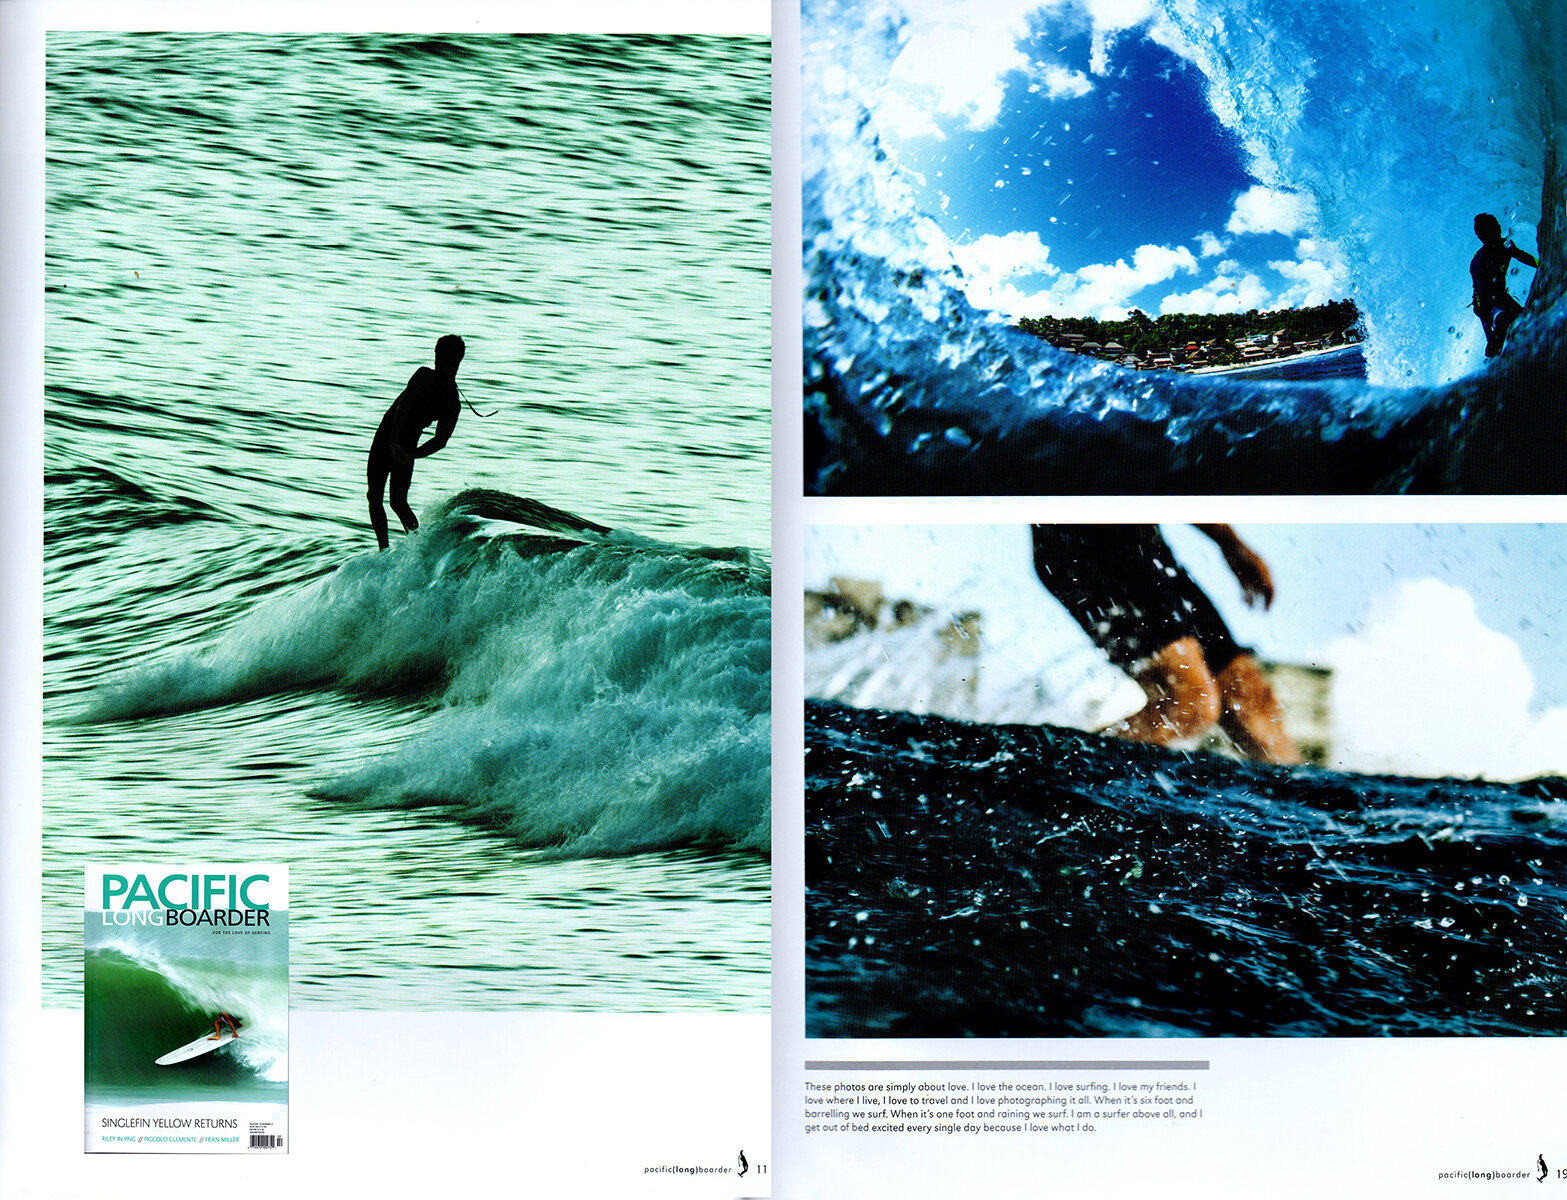 Pacific_Longboarder_Magazine_PLB_Fran_Miller_Portfolio_by_Aaron_Chapman_1.jpg